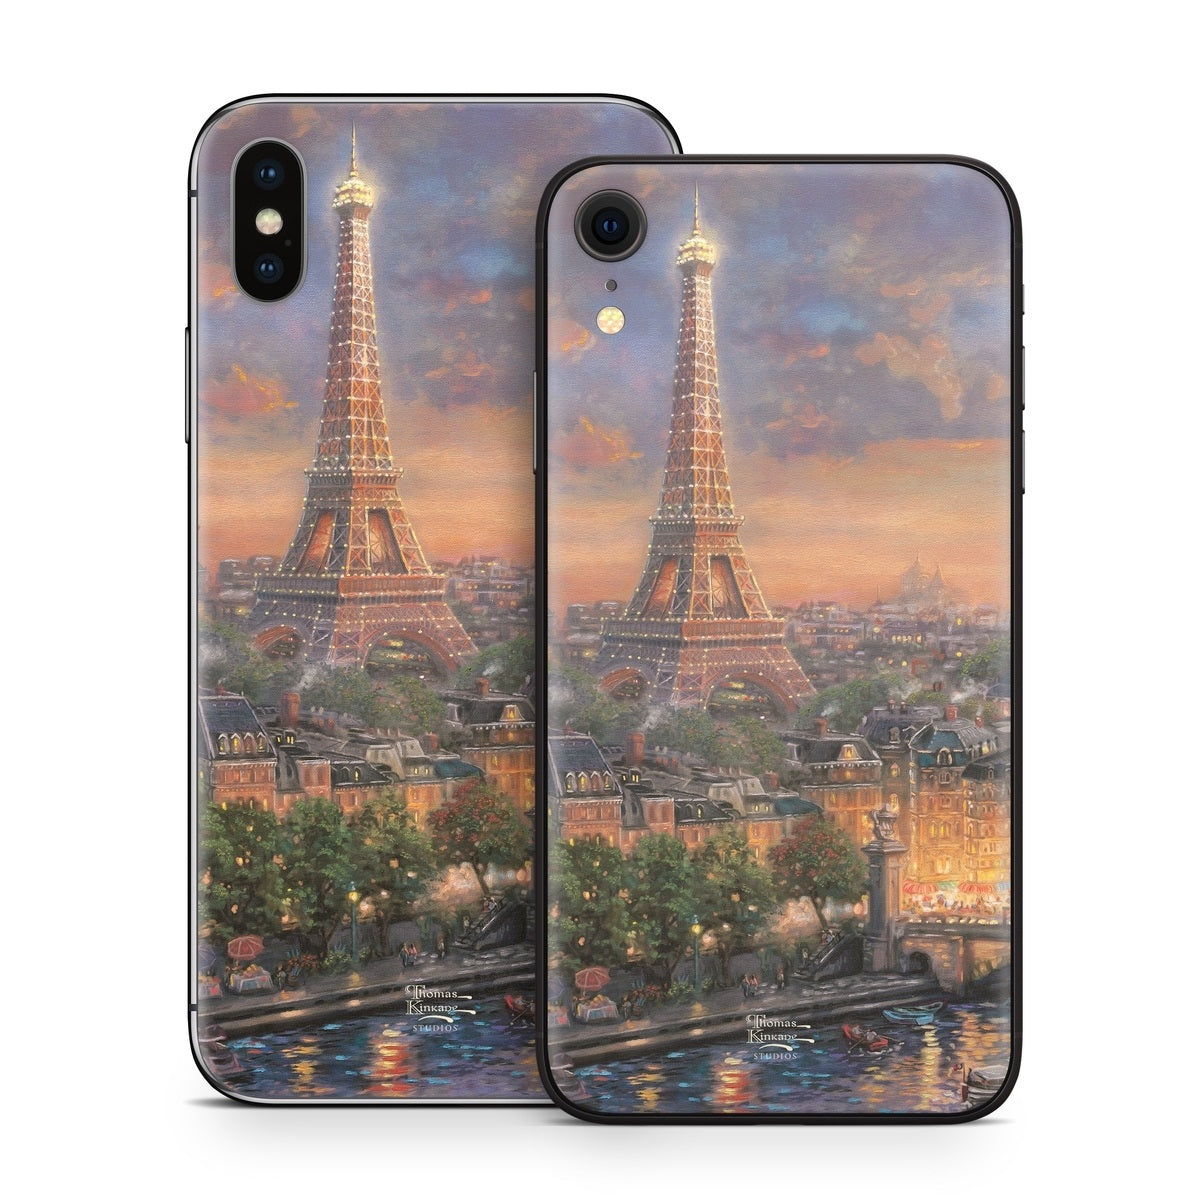 Paris City of Love - Apple iPhone X Skin